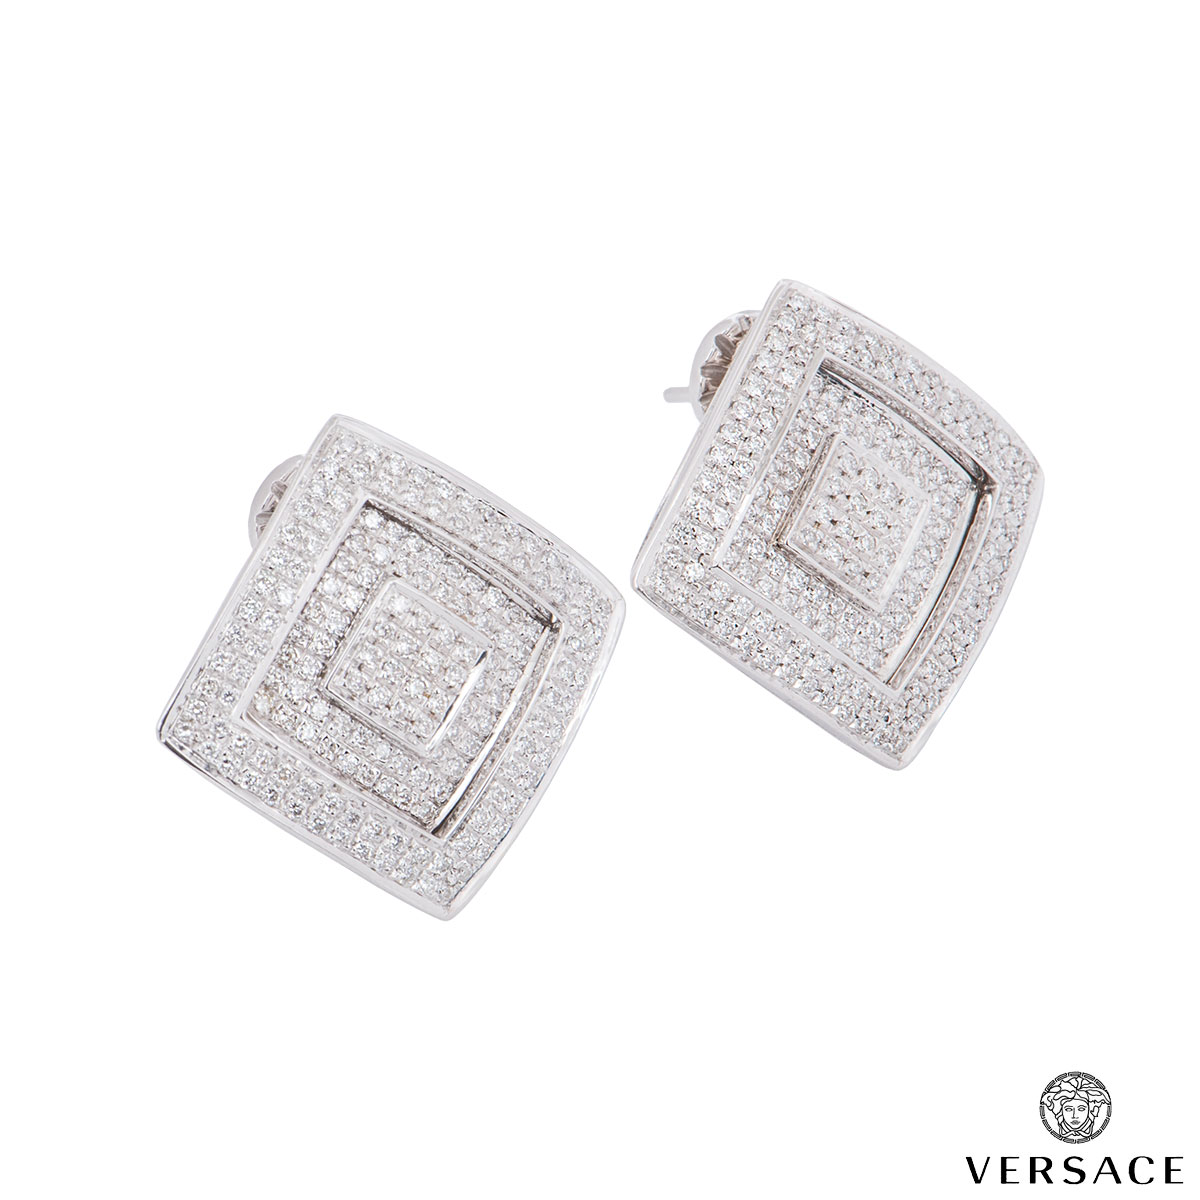 Versace White Gold Diamond Square Earrings